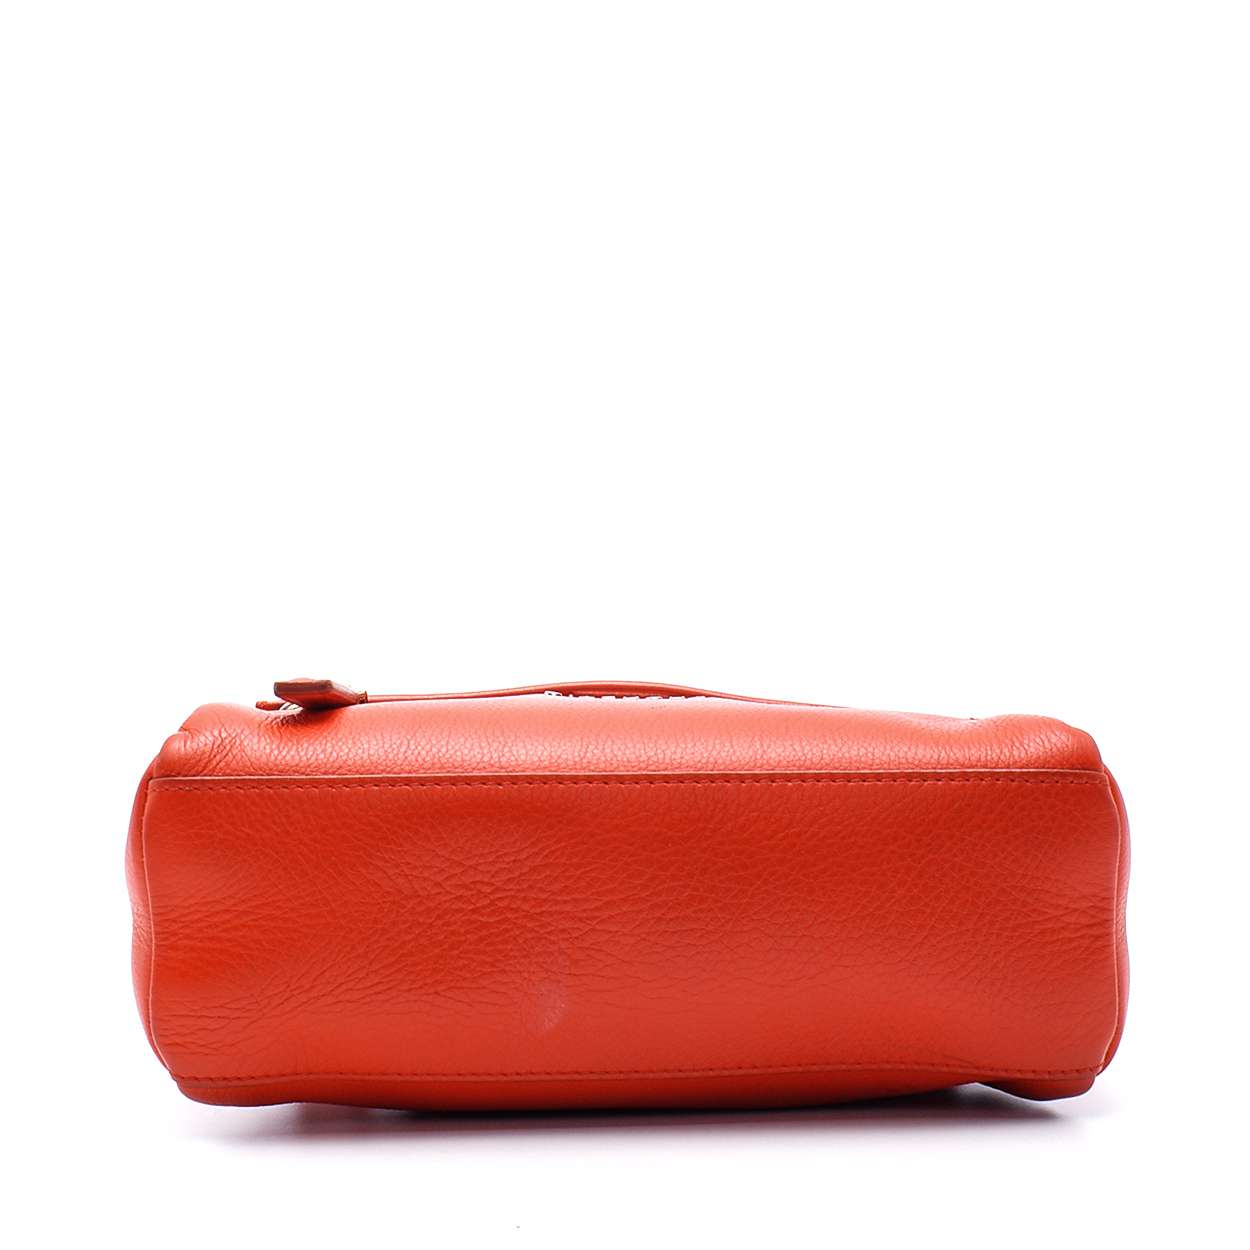 Givenchy - Red Leather Medium Pandora Bag